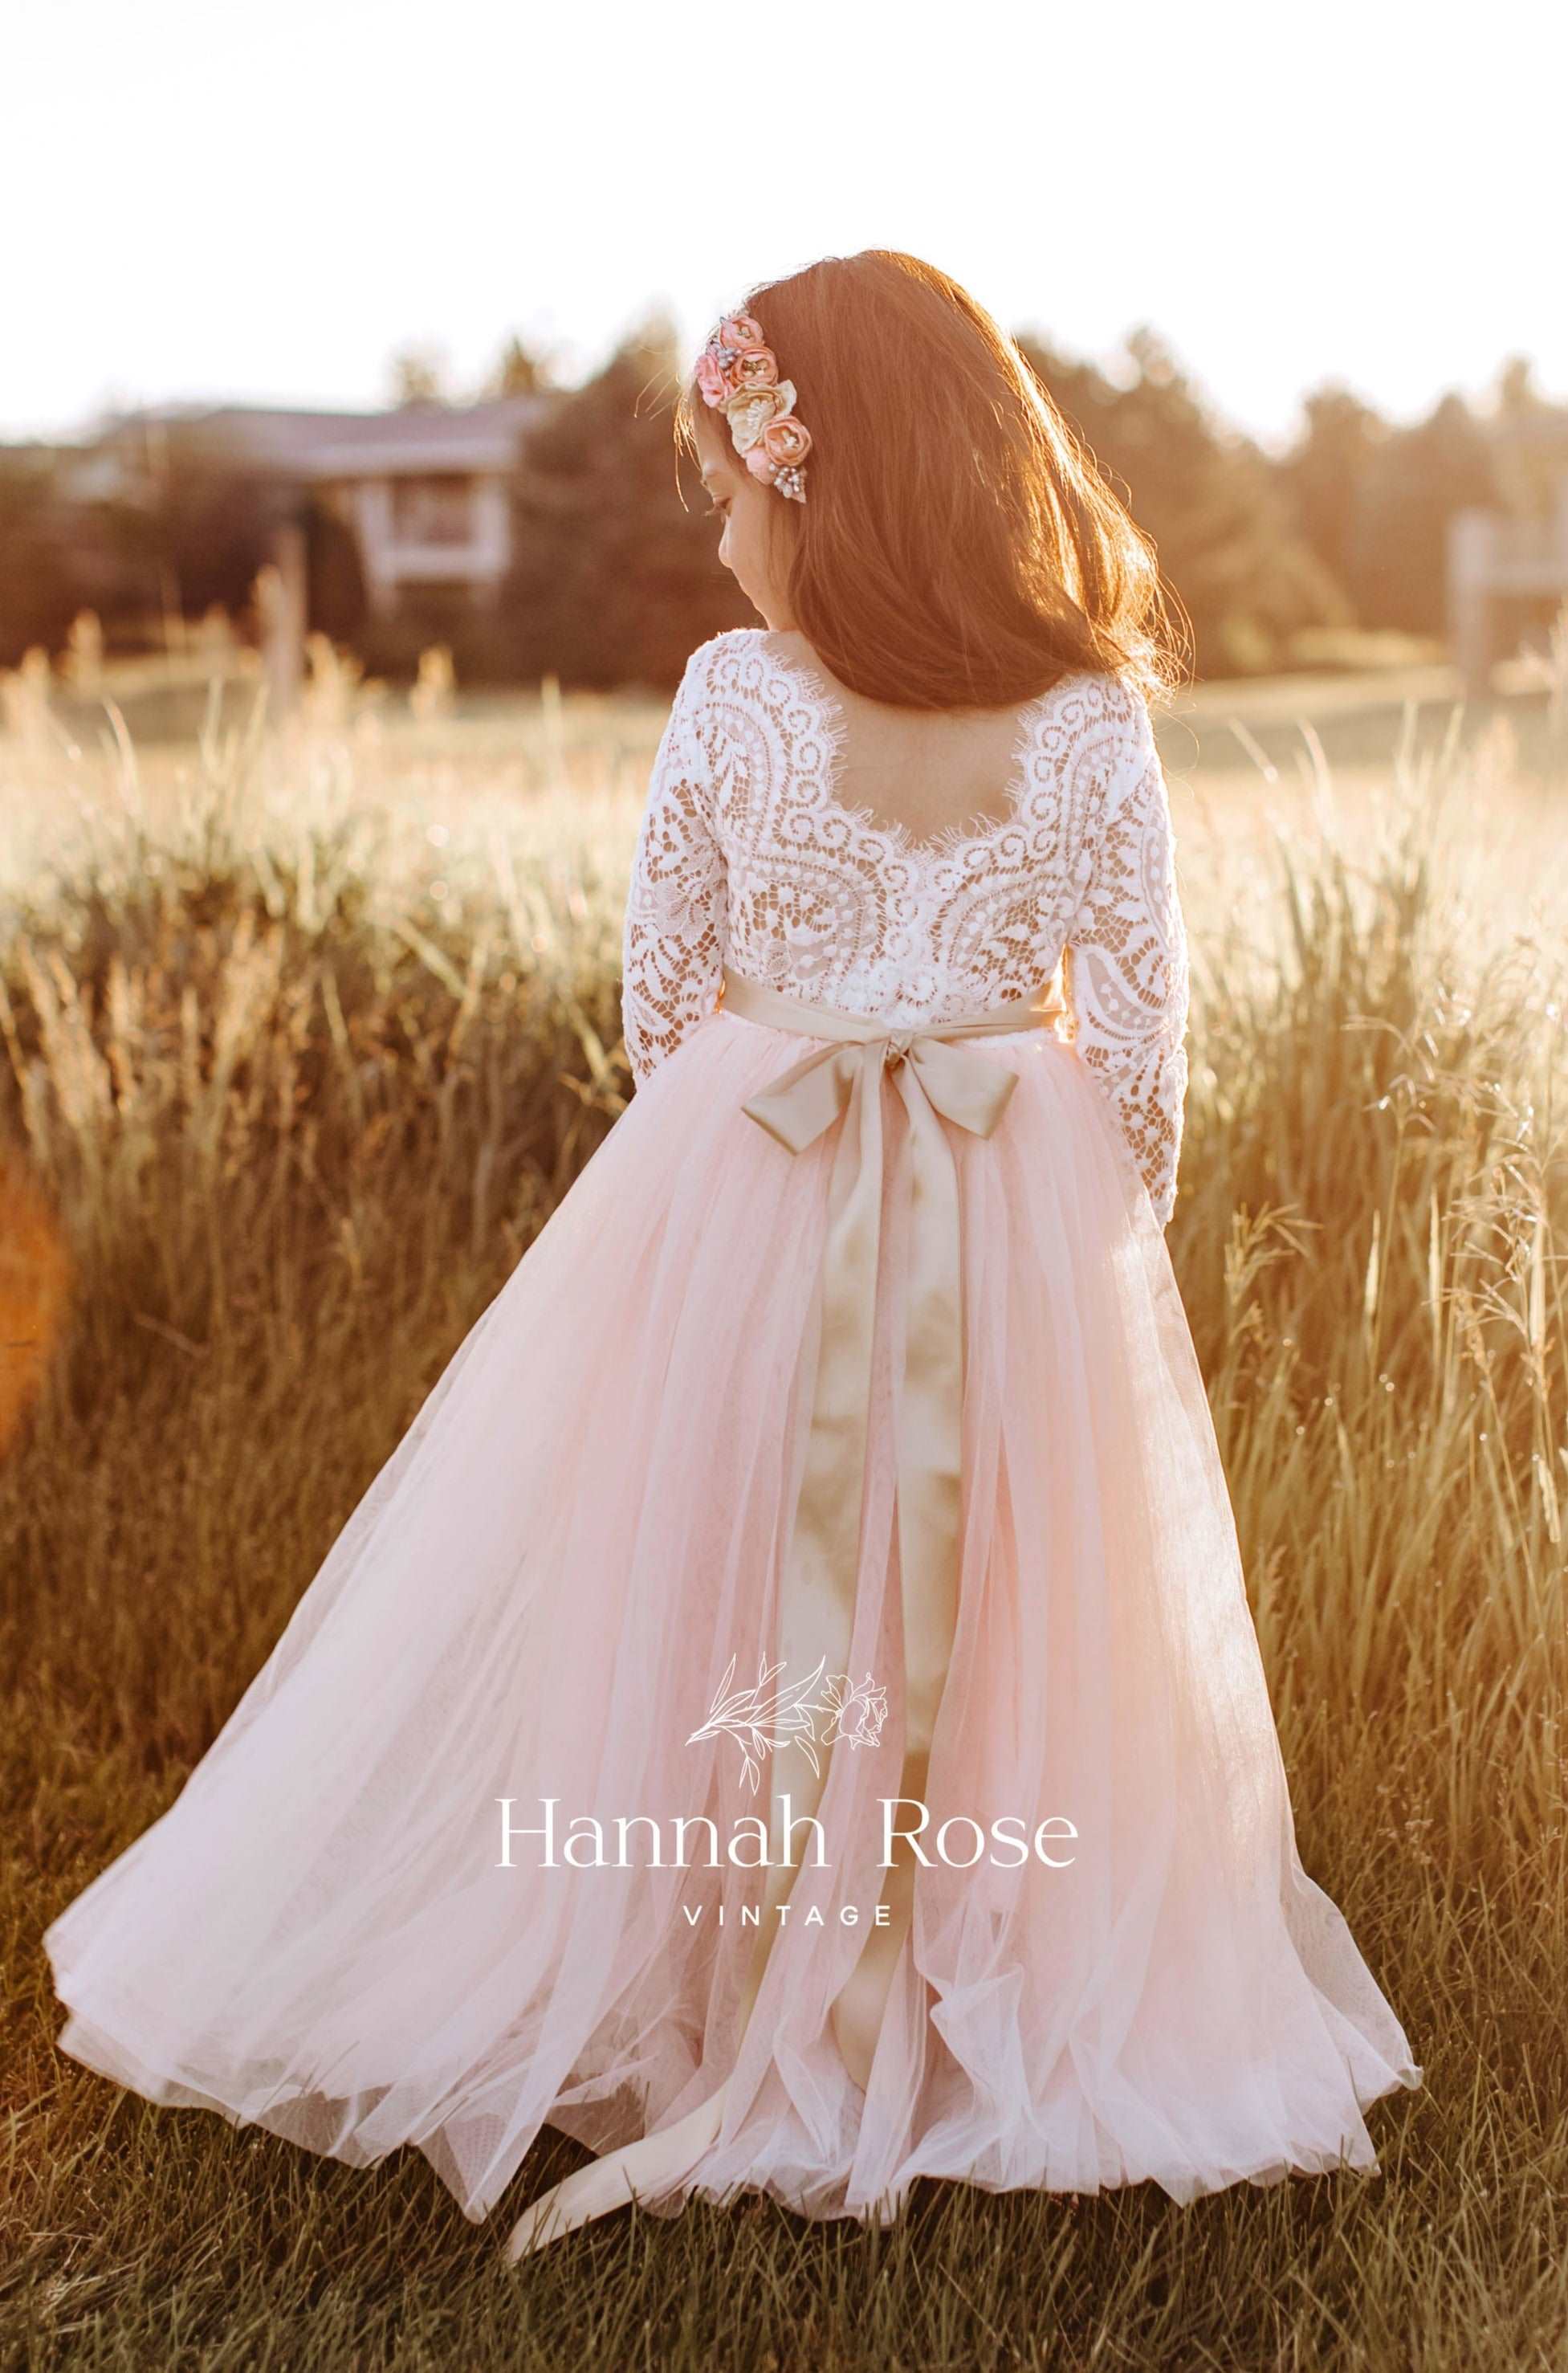 Blush Tulle Flower Girl Dress with Sleeves - Hannahrosevintageboutique.com